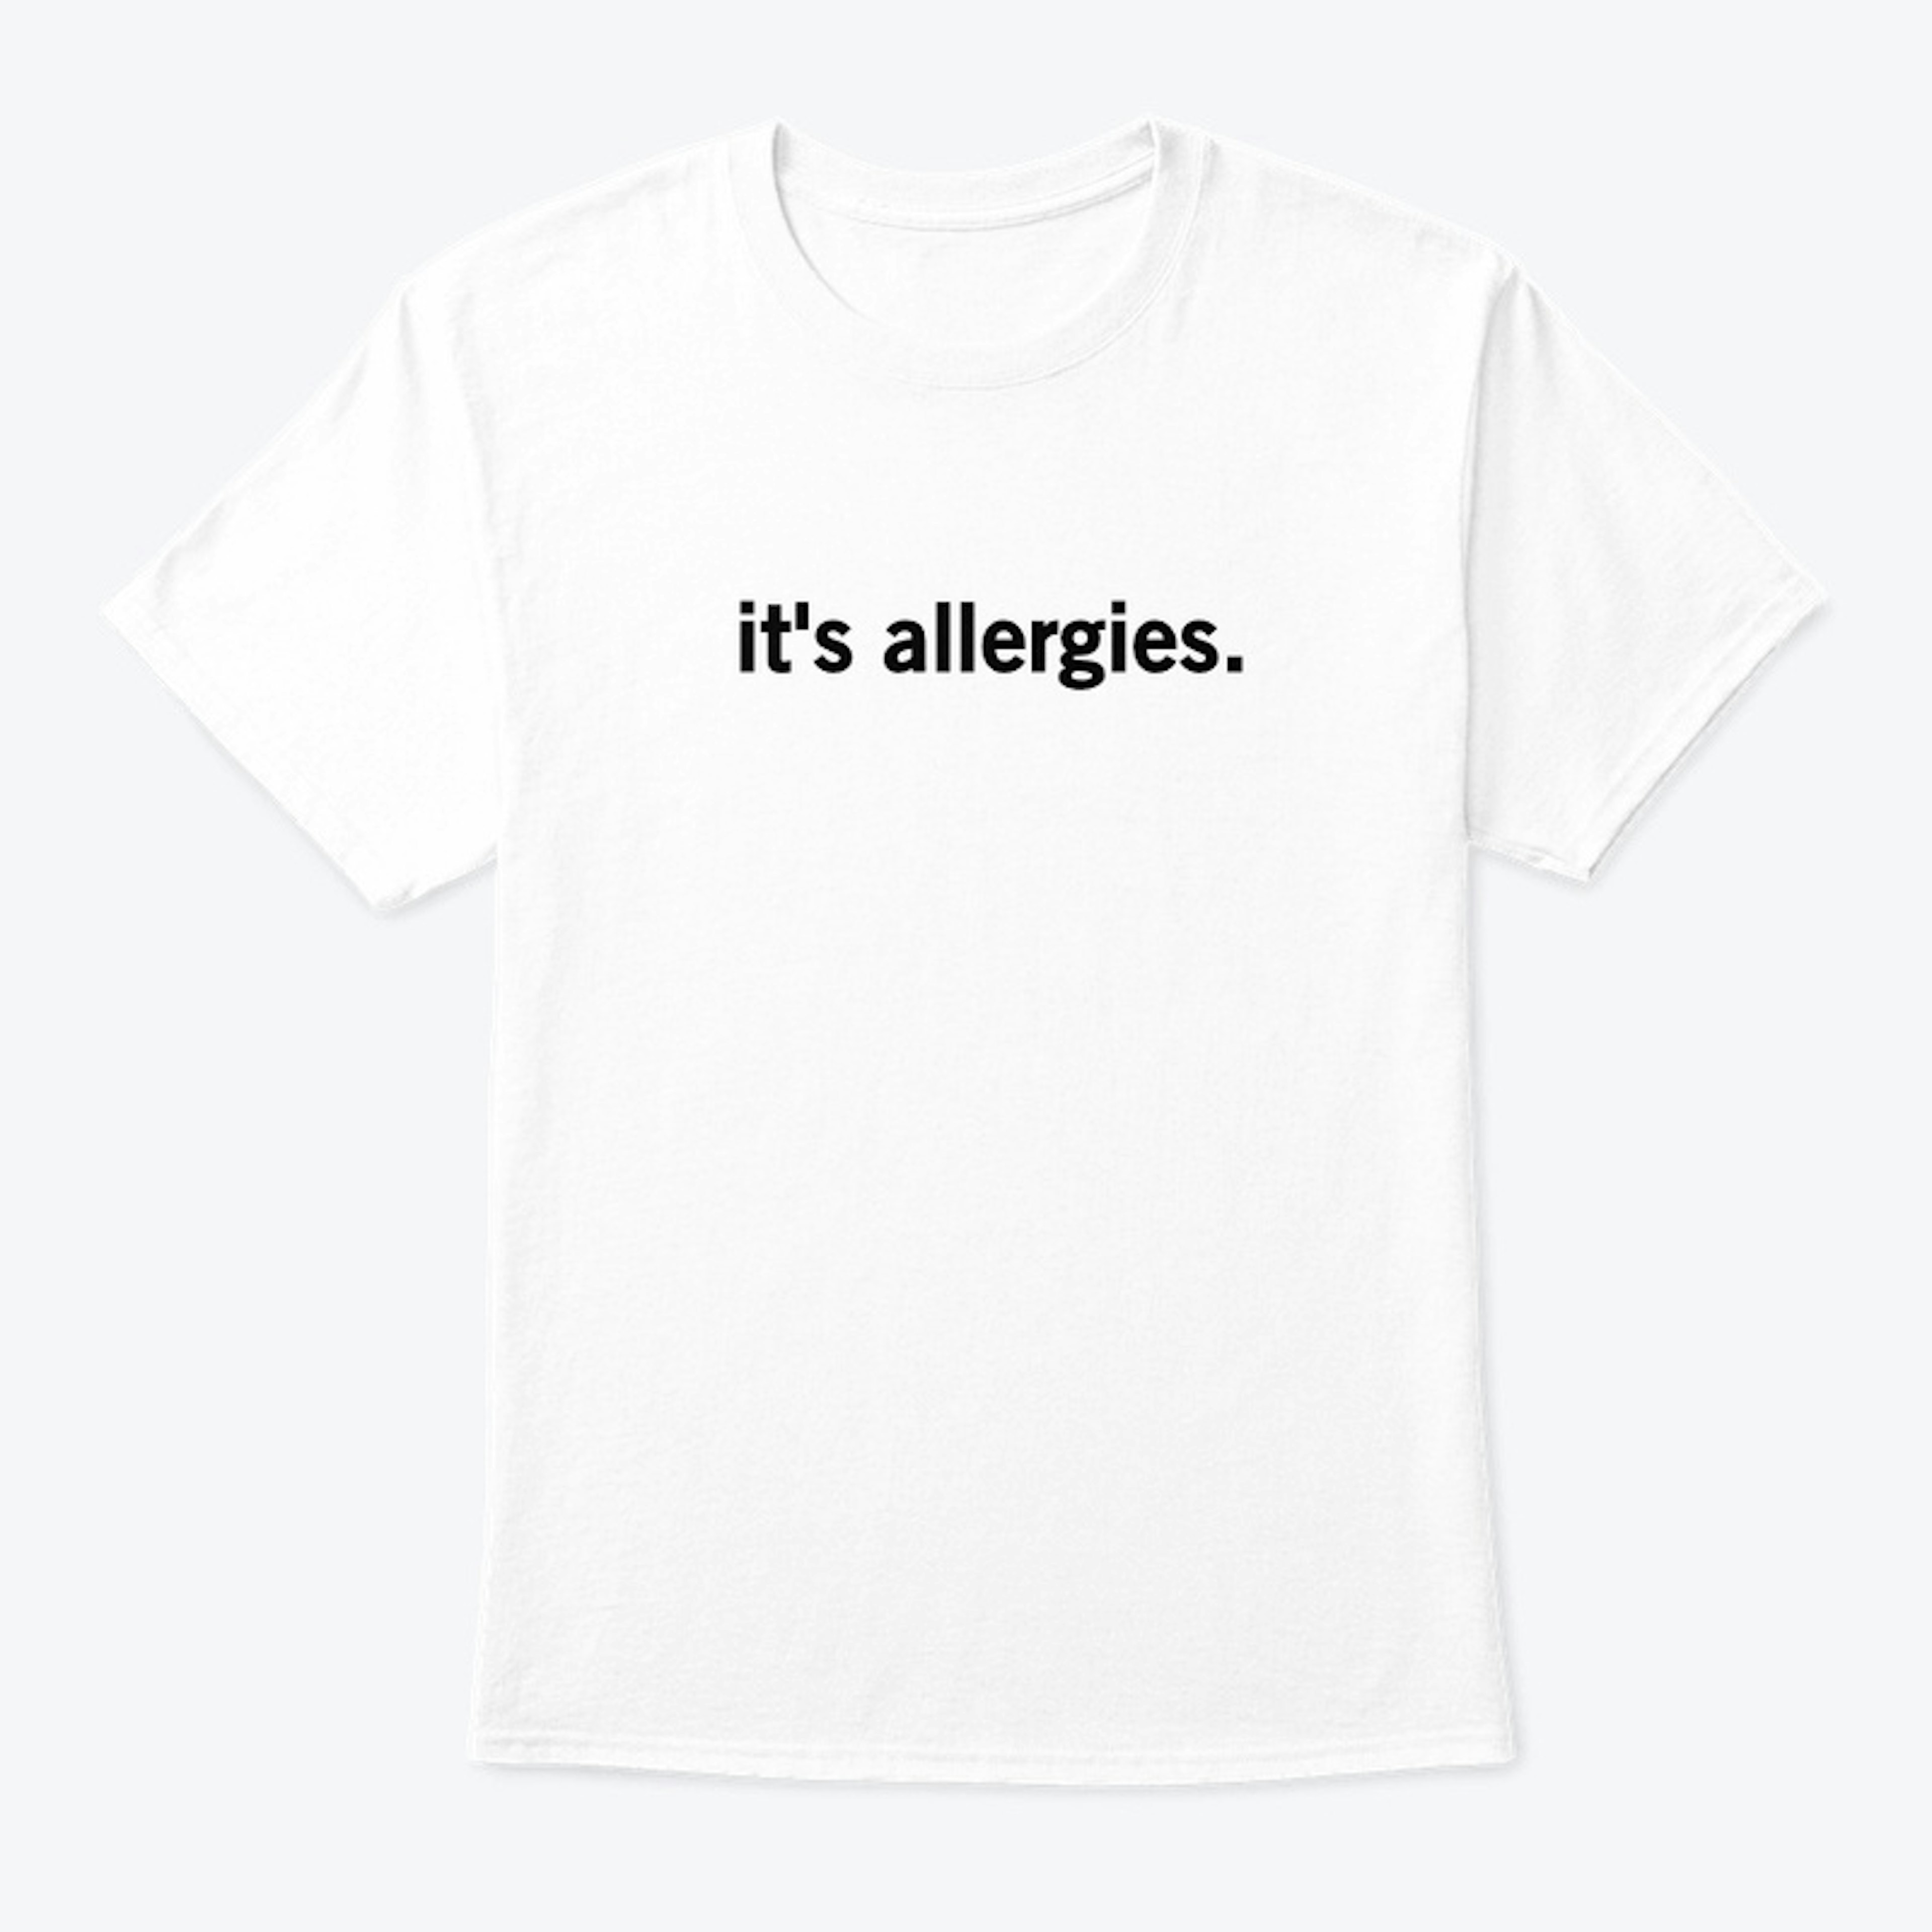 it's allergies